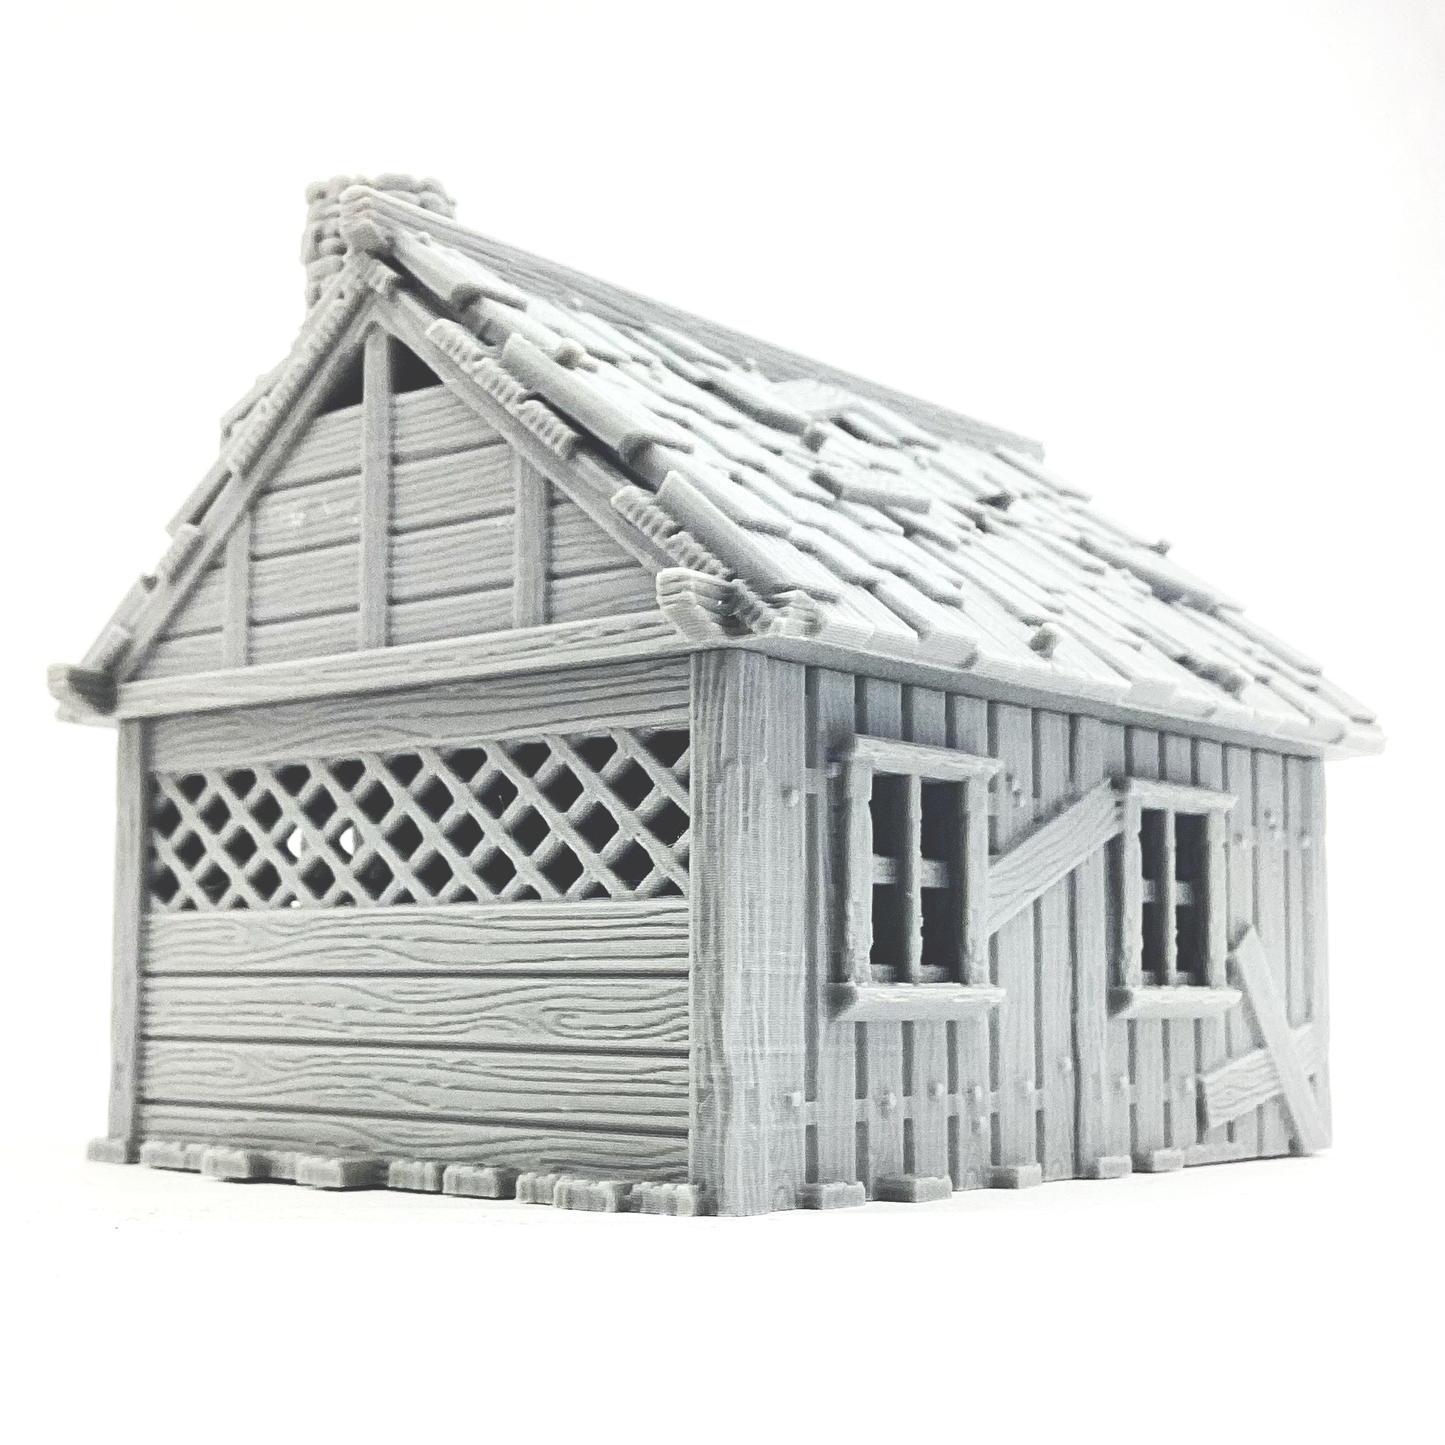 Lumberjack Hut 28mm tabletop sized playable house 3dpforu